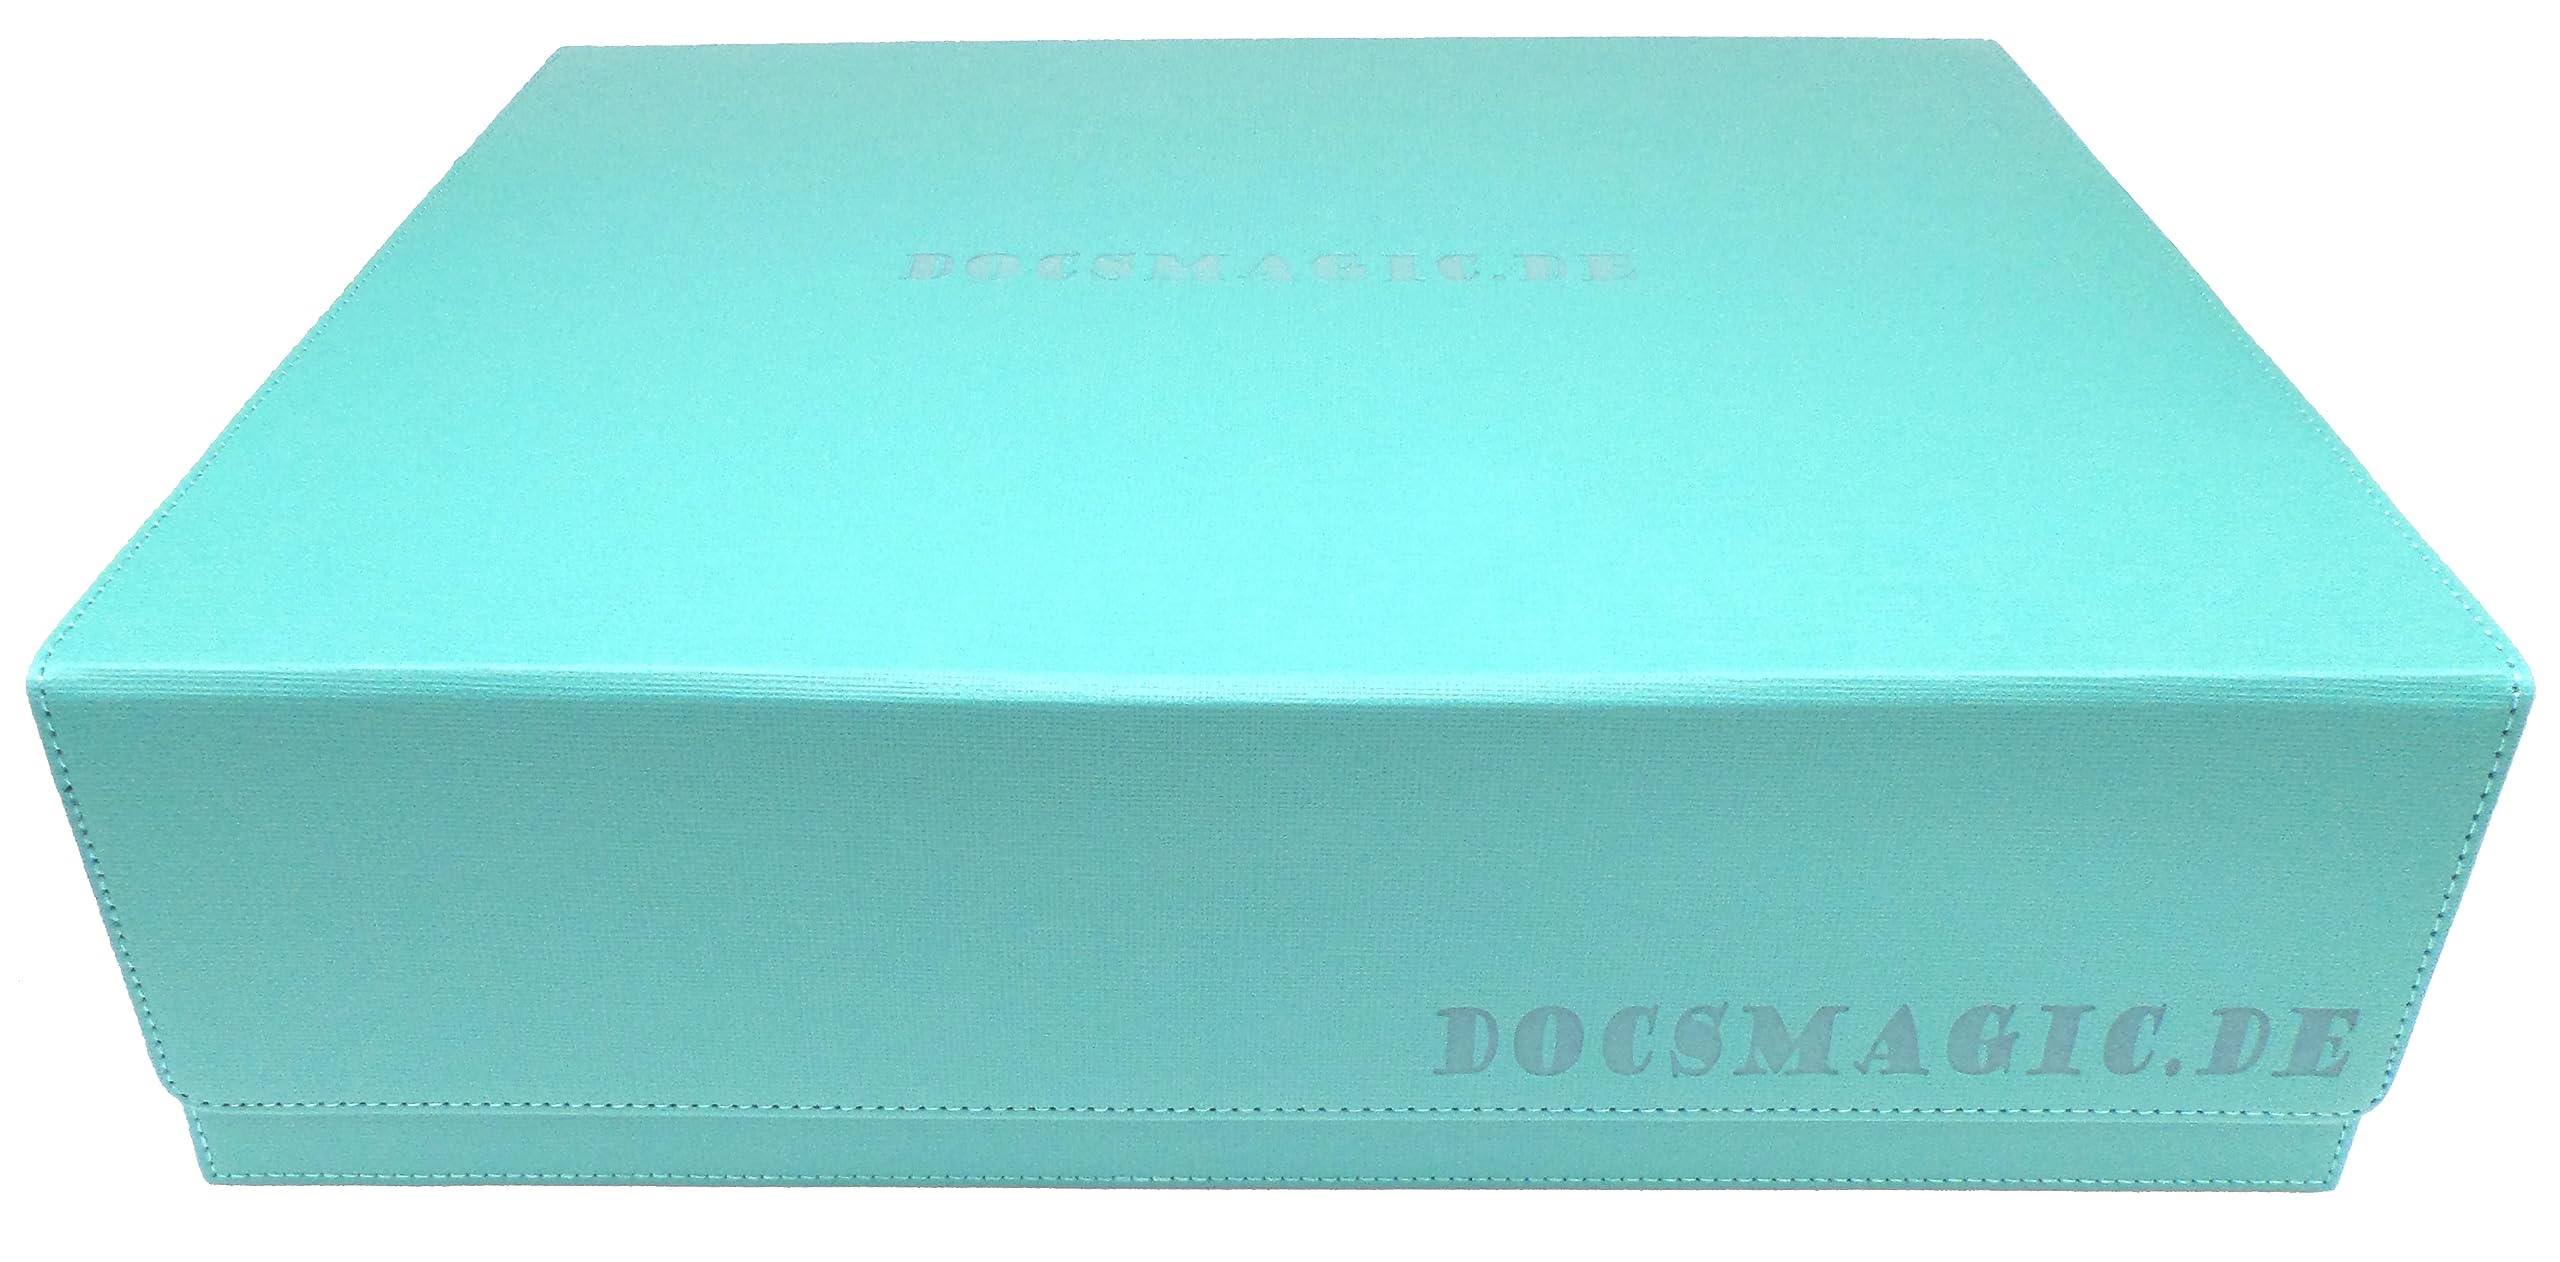 docsmagic.de Premium 4-Row Trading Card Storage Box Mint + Trays & Divider - MTG PKM YGO - Aufbewahrungsbox Aqua